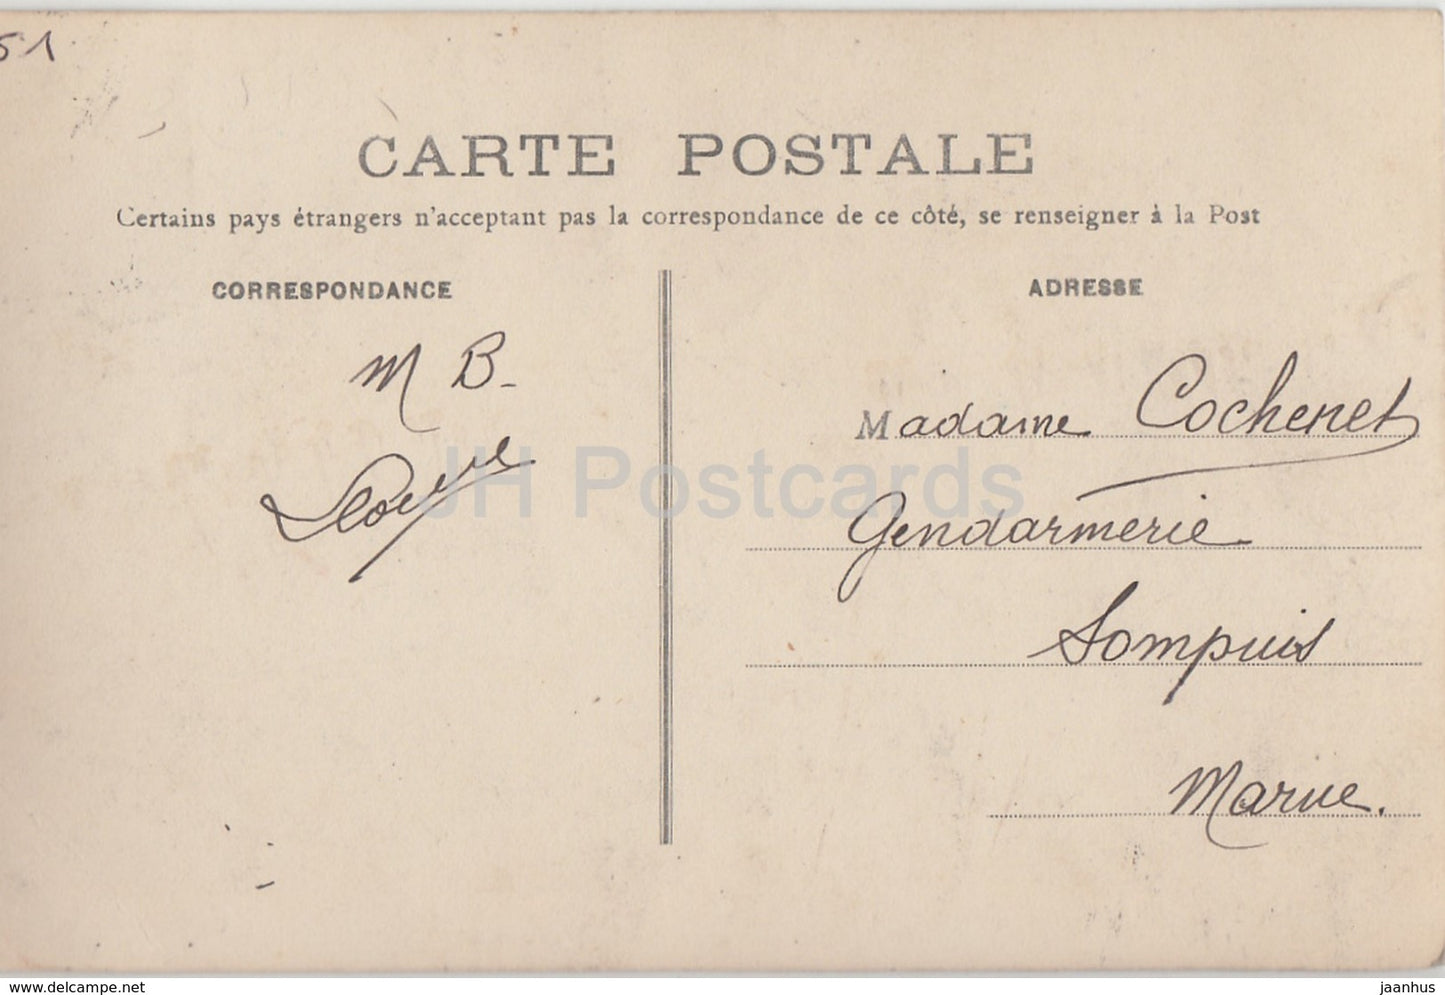 Epernay - Chateau de Boursault - castle - old postcard - 1913 - France - used